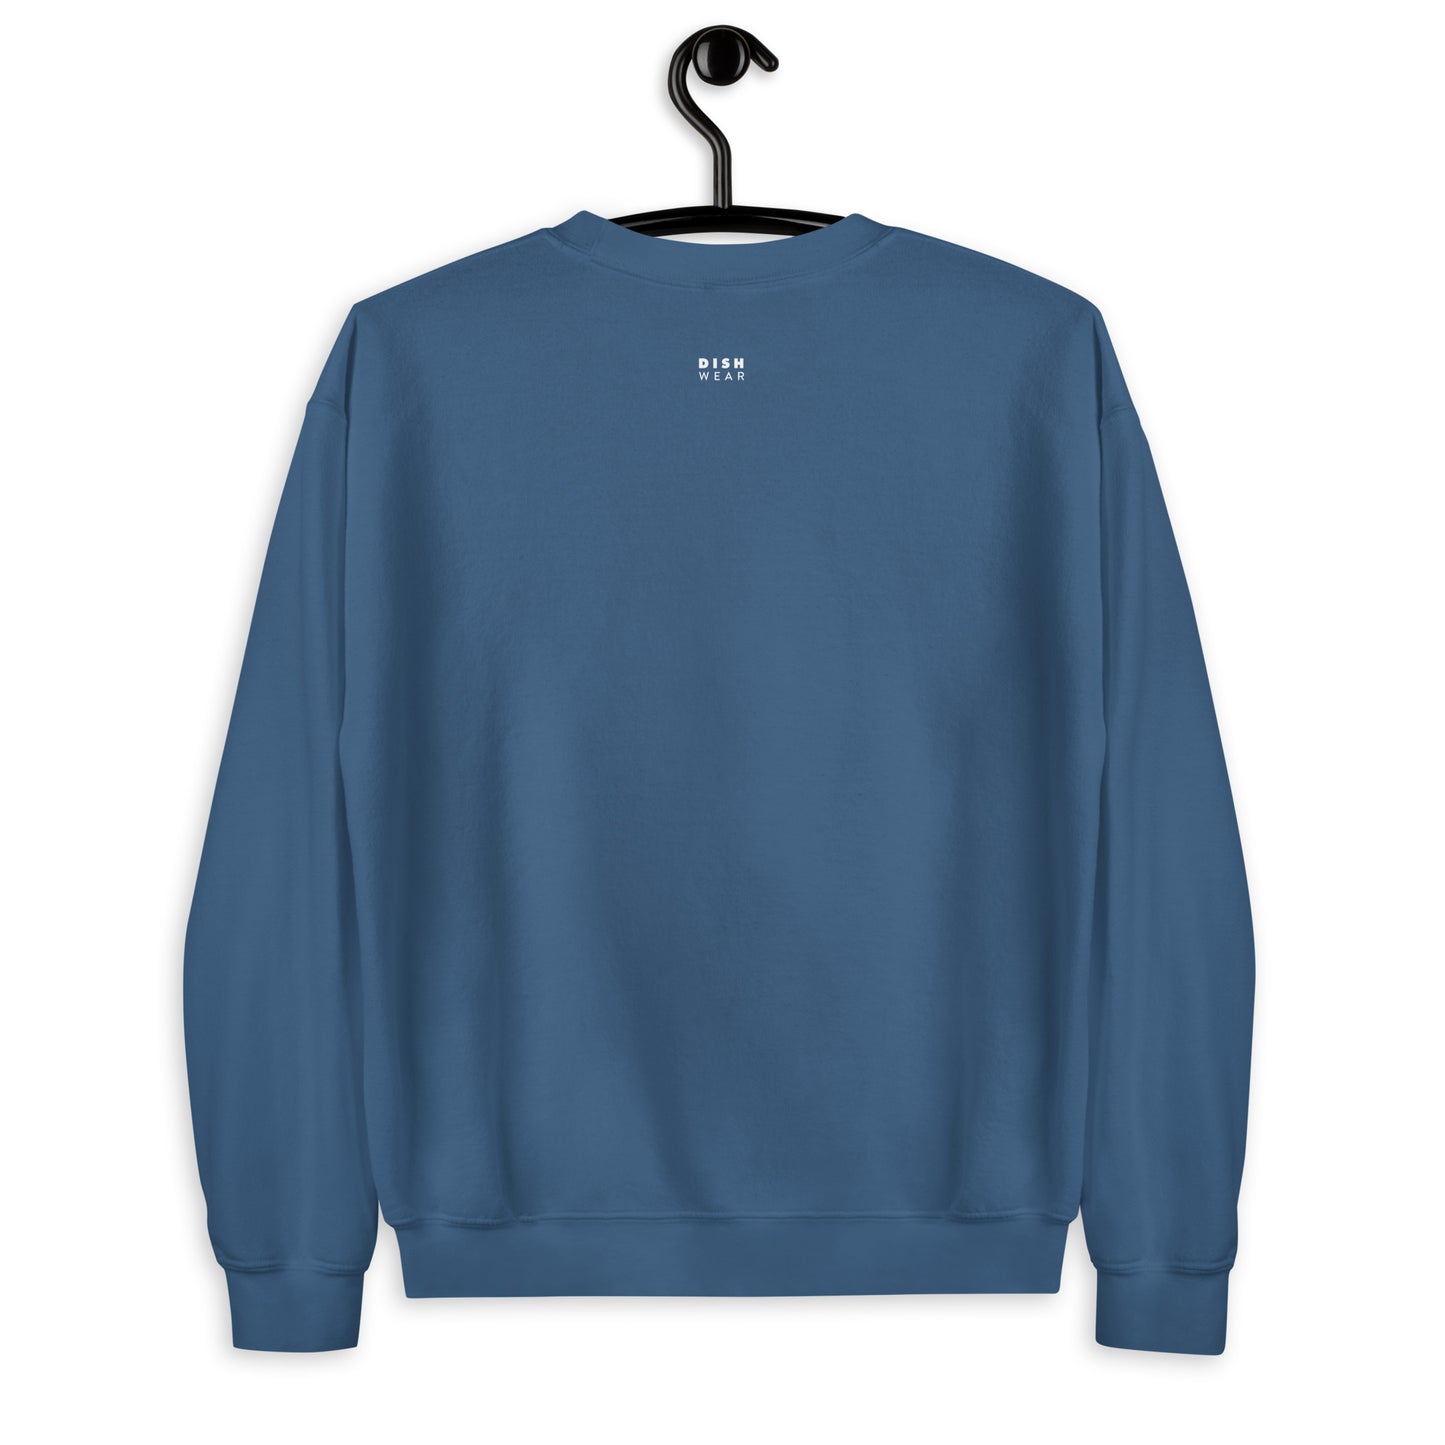 Al Dente Sweatshirt - Straight Font